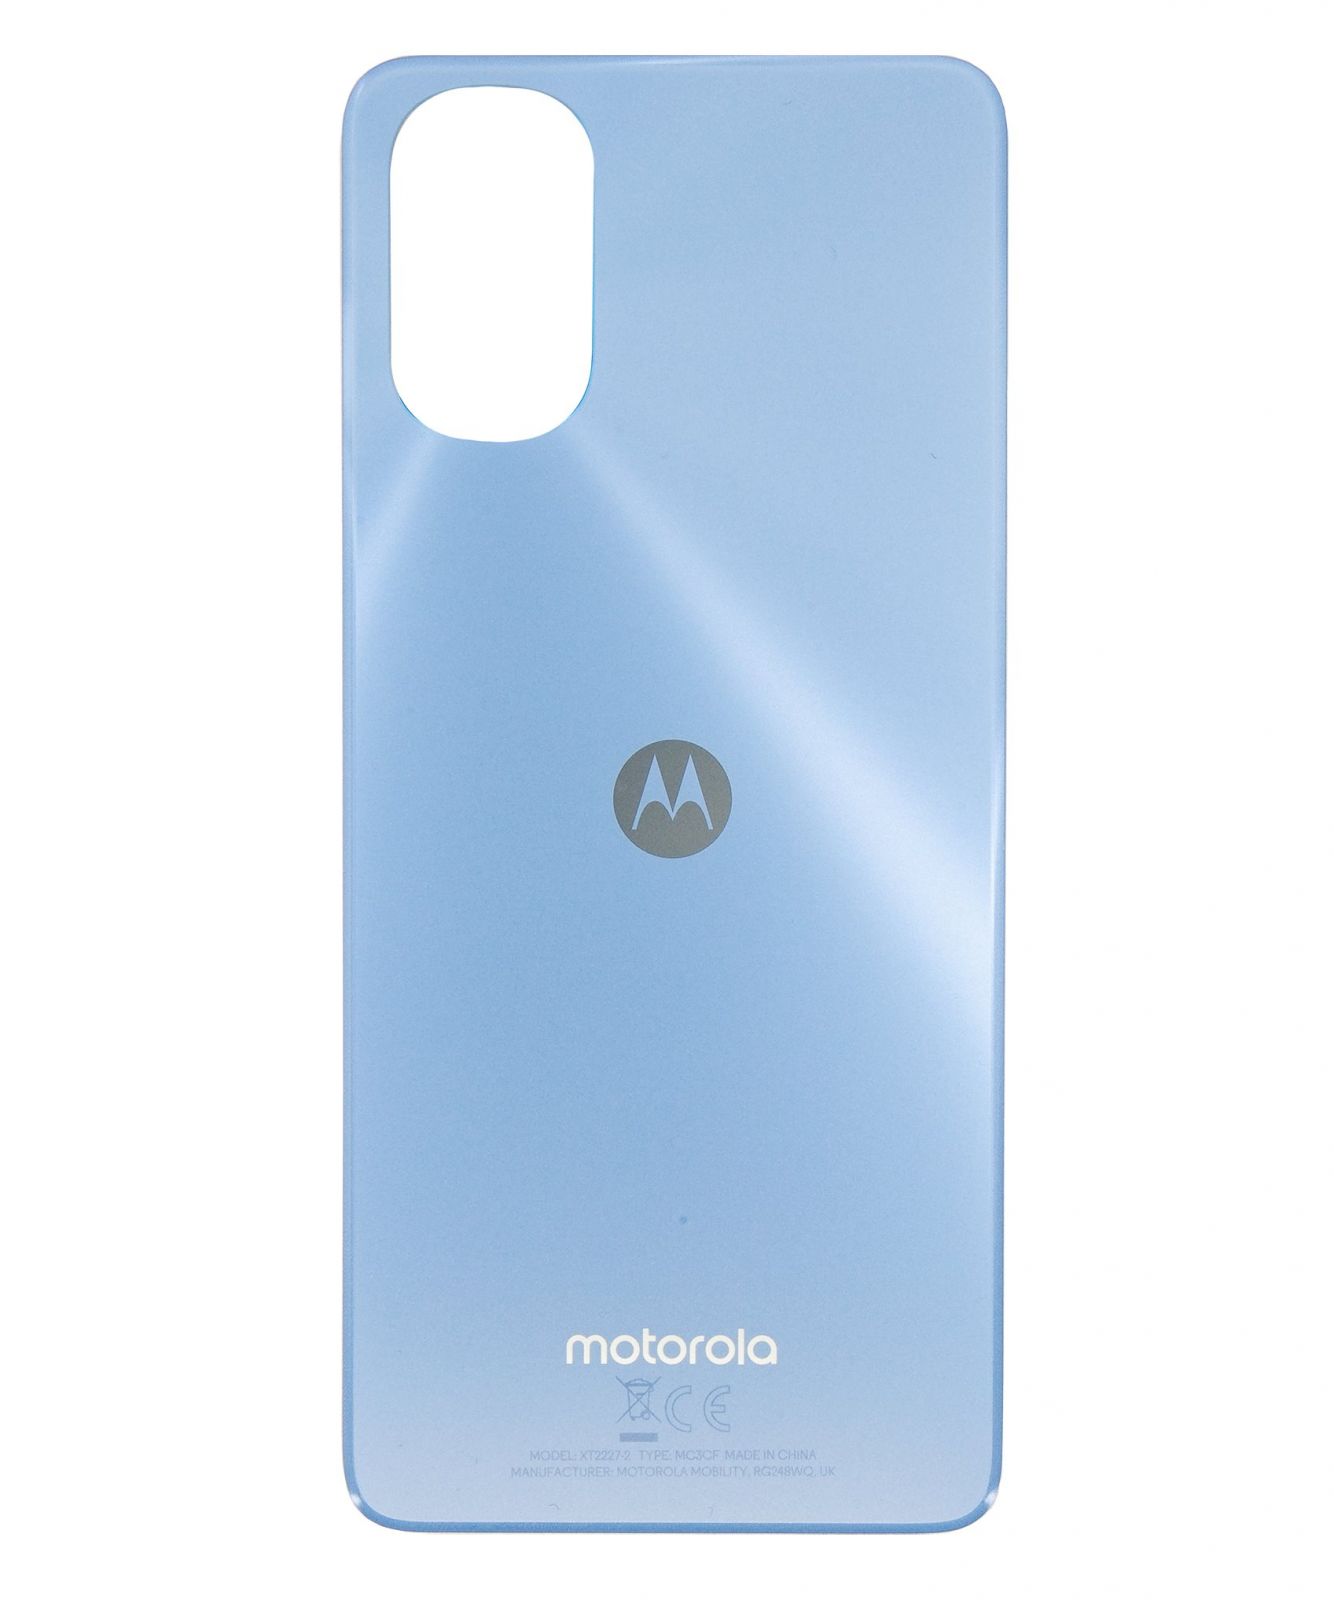 Motorola E32 Kryt Baterie Altay Blue (Service Pack) - Originál